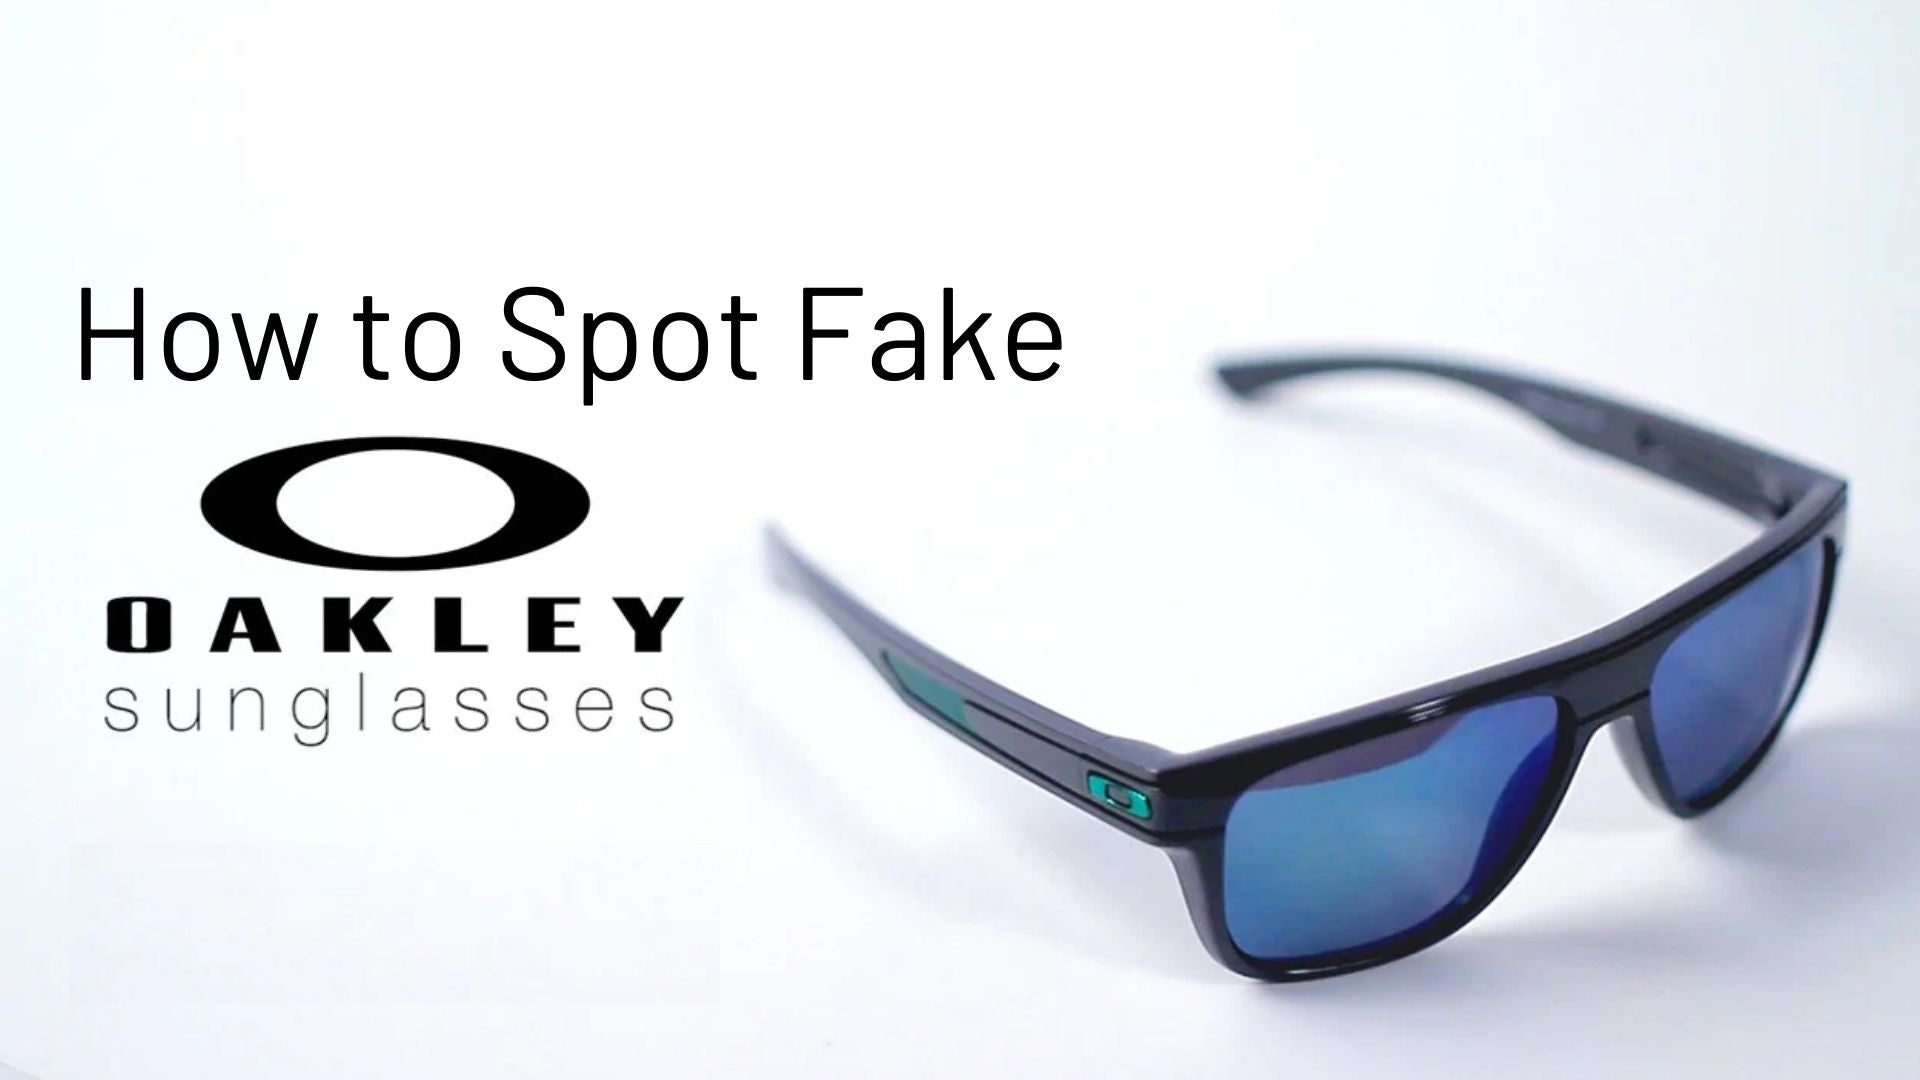 How to Spot Fake Sunglasses